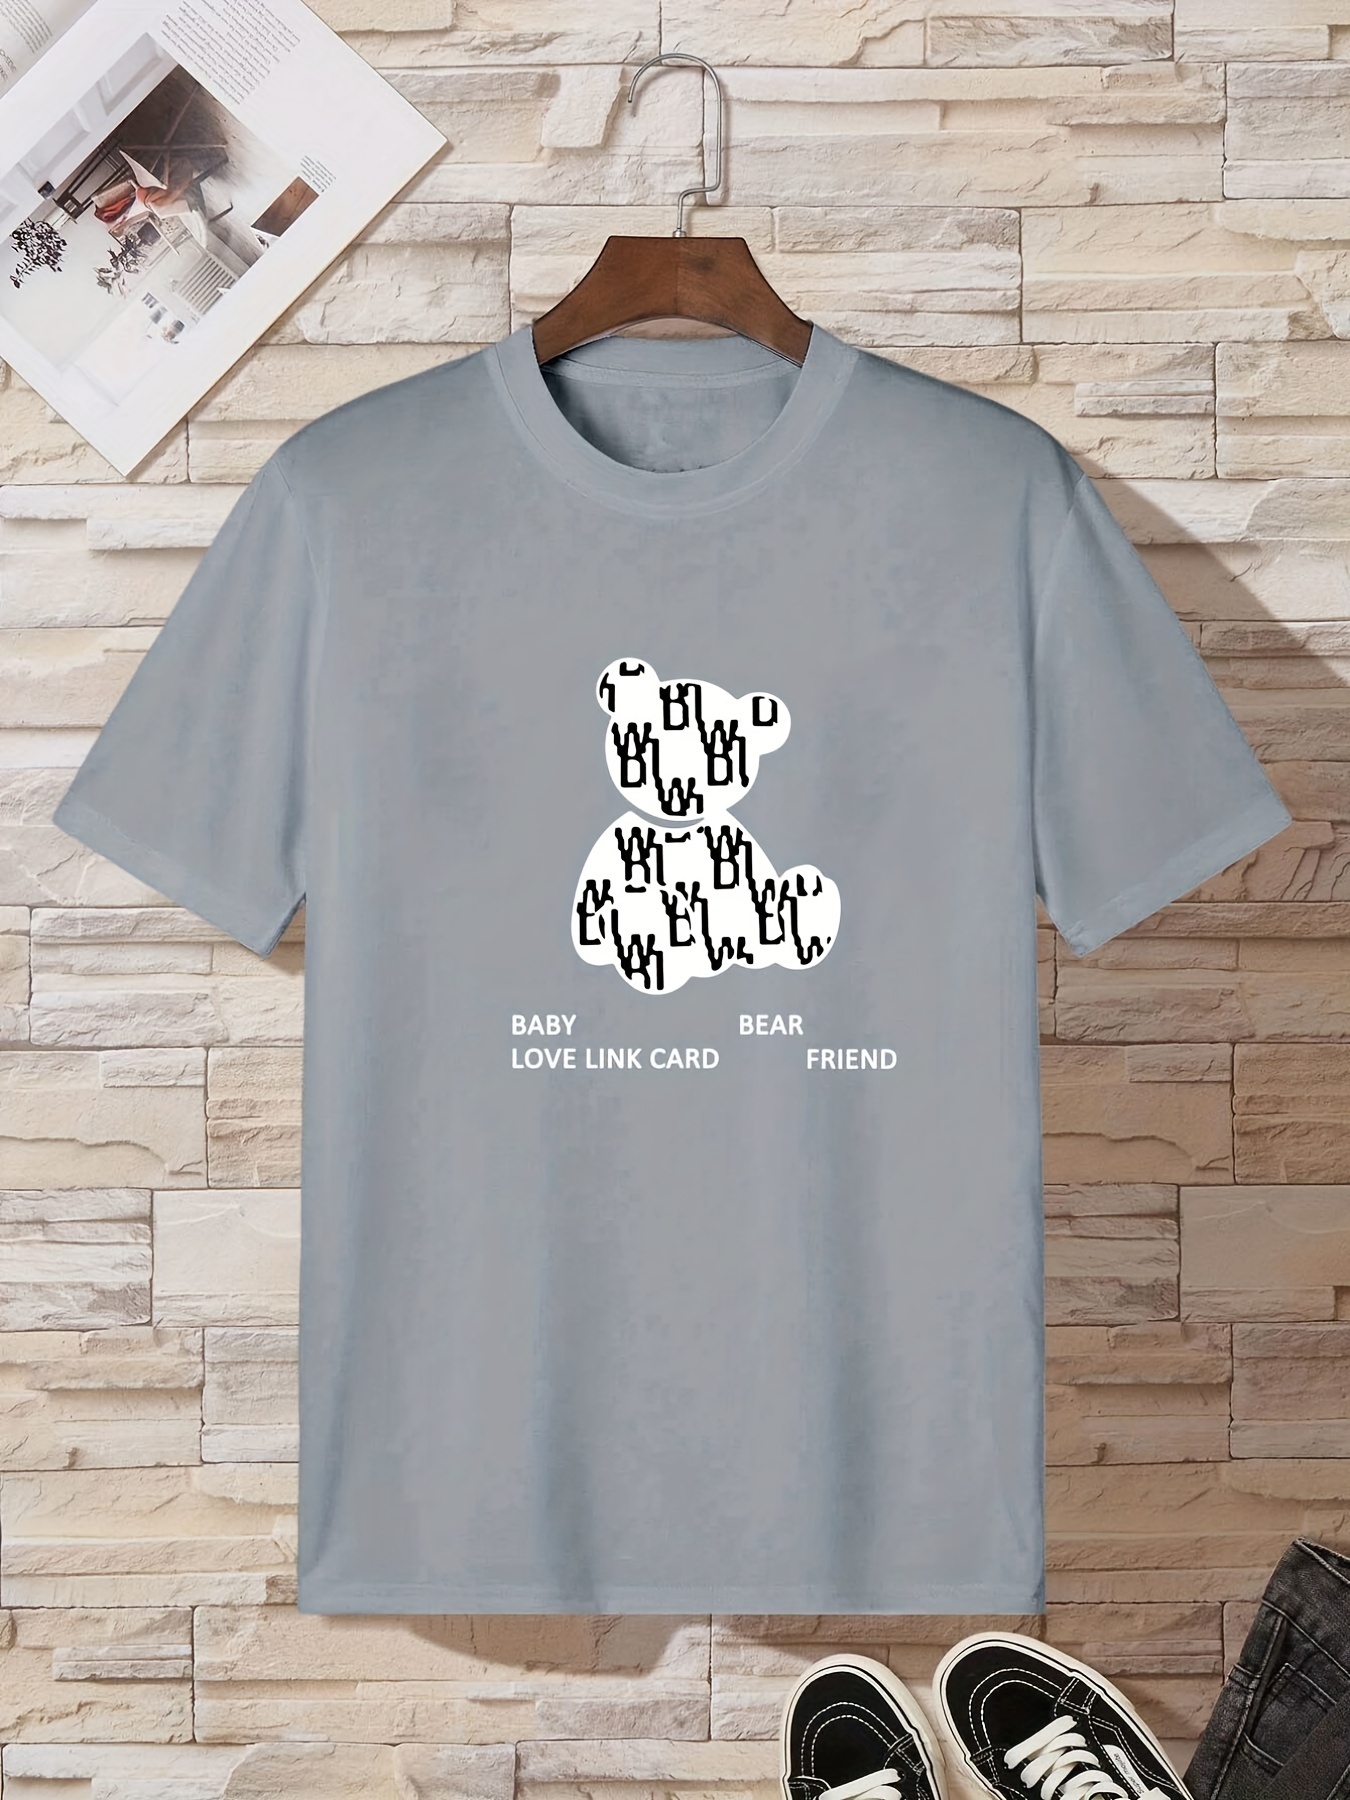 Cool t-shirt designs  Monogram outfit, Monogram t shirts